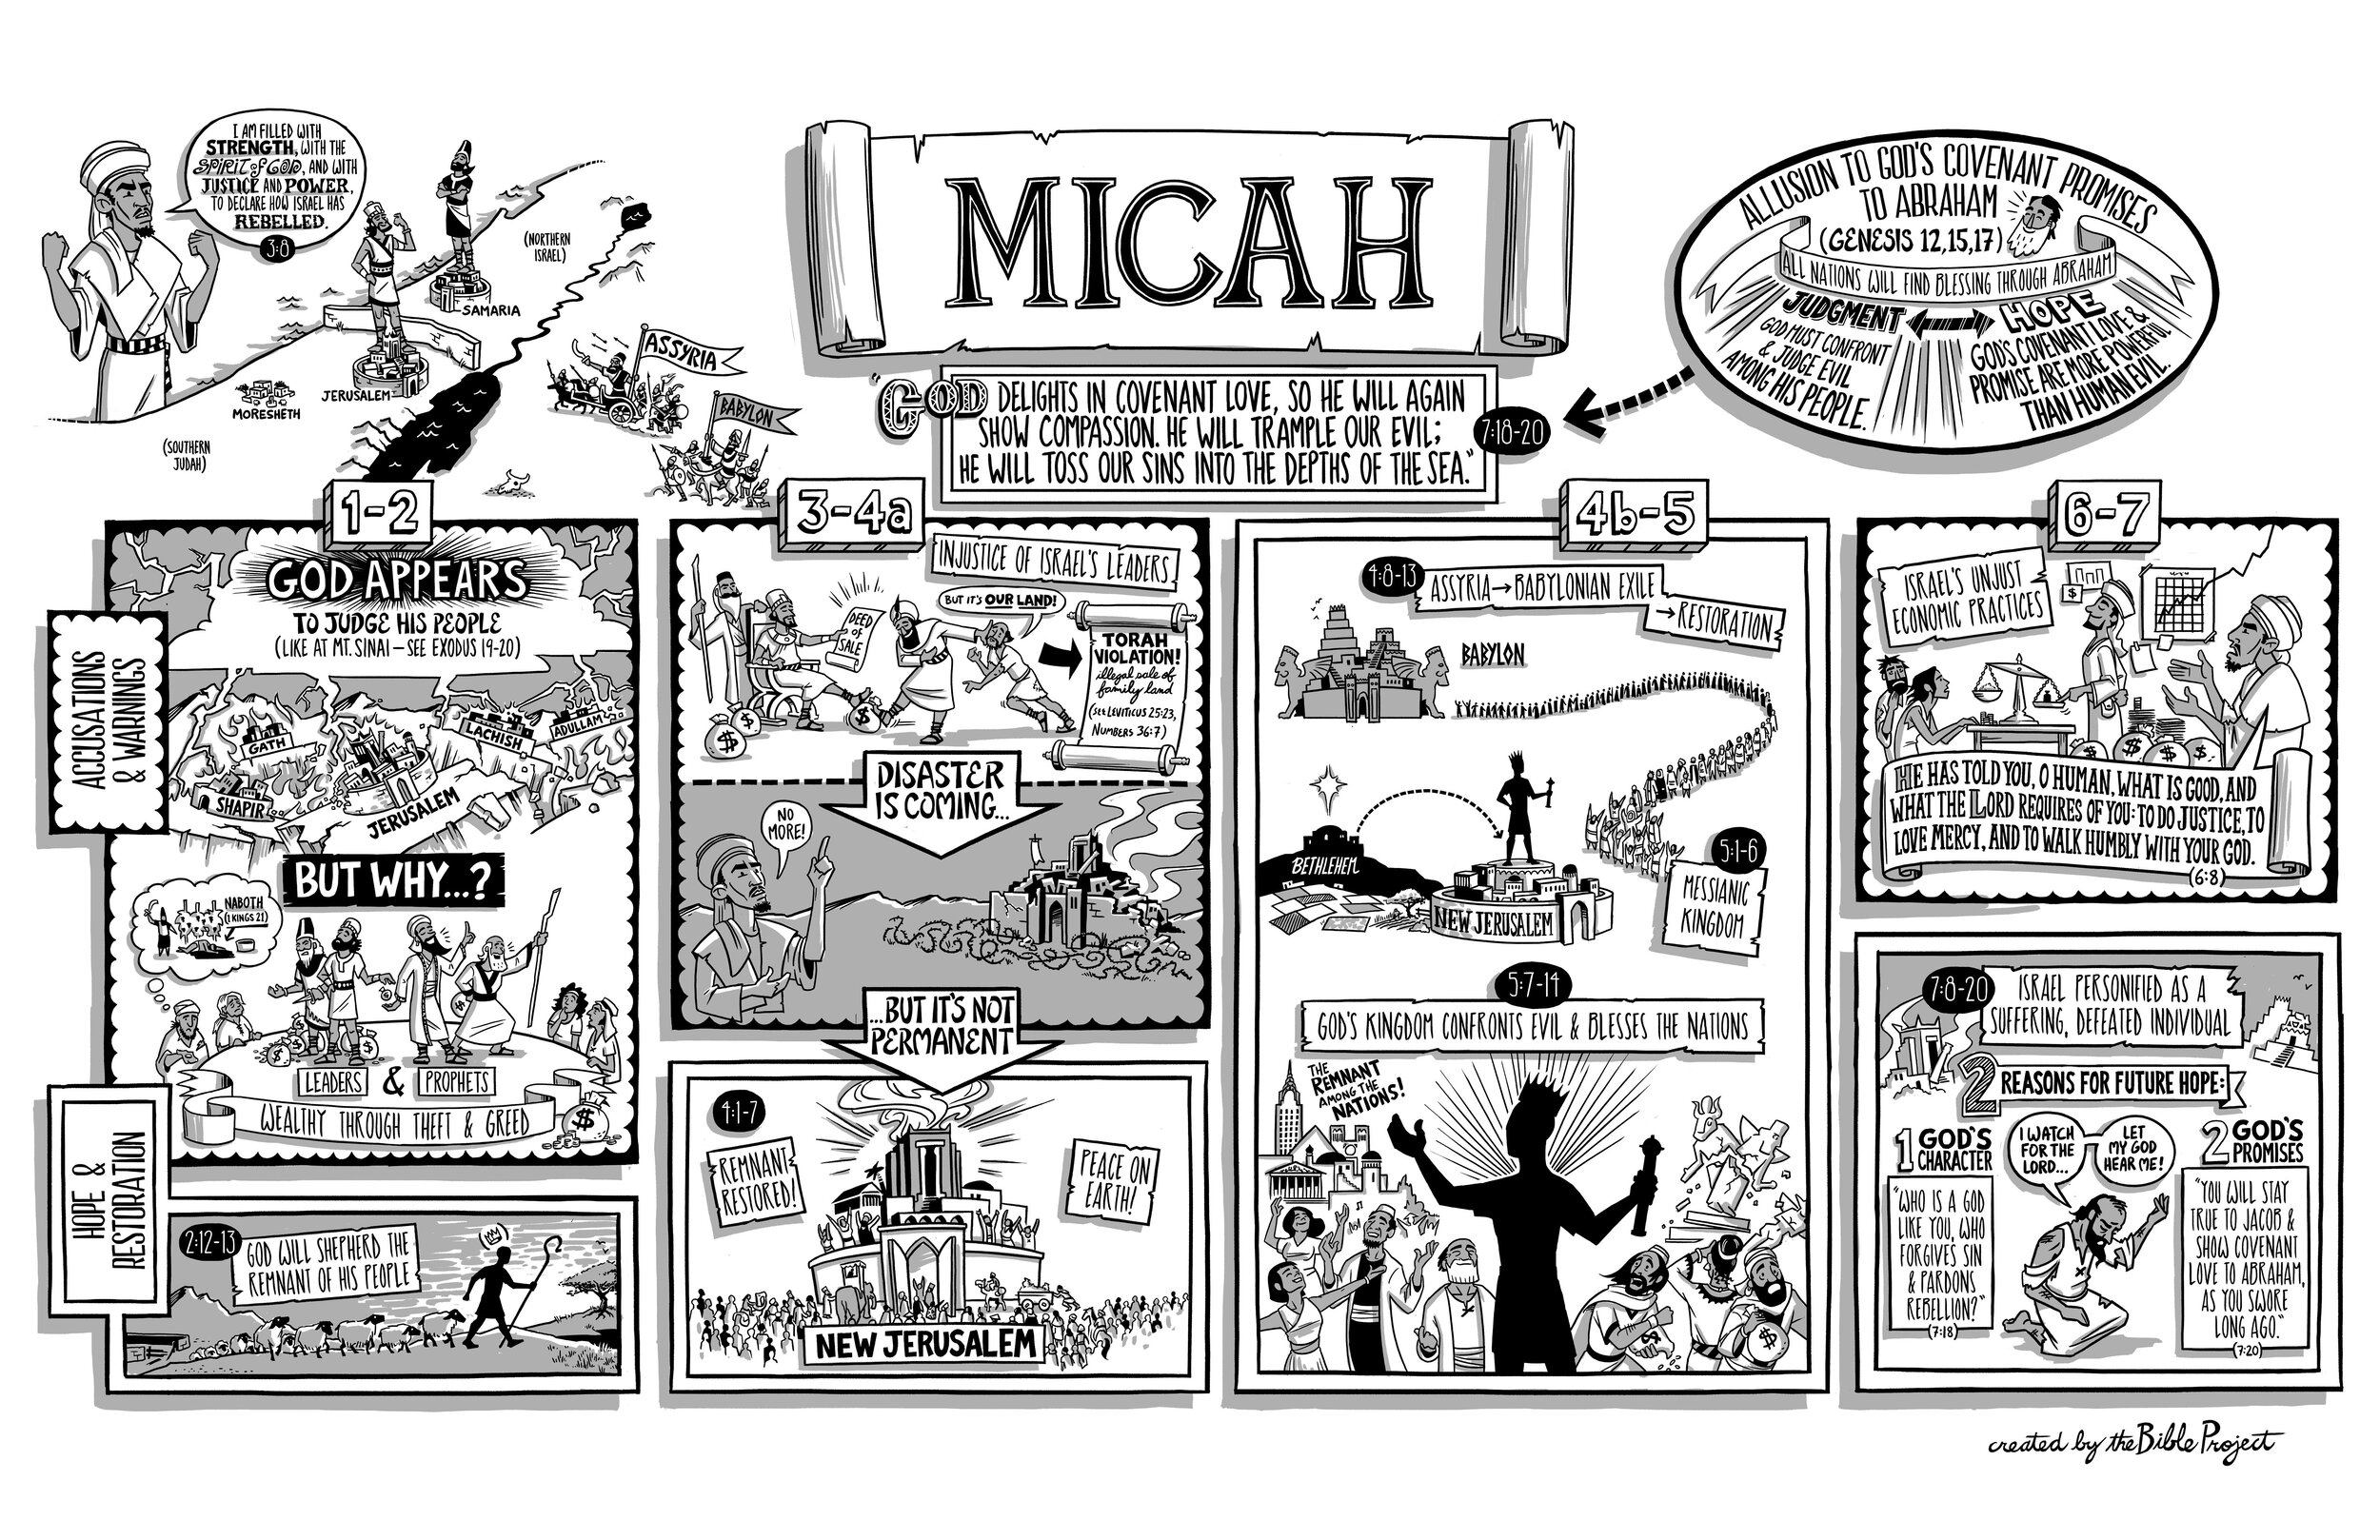 BibleProject: Micah (Video)